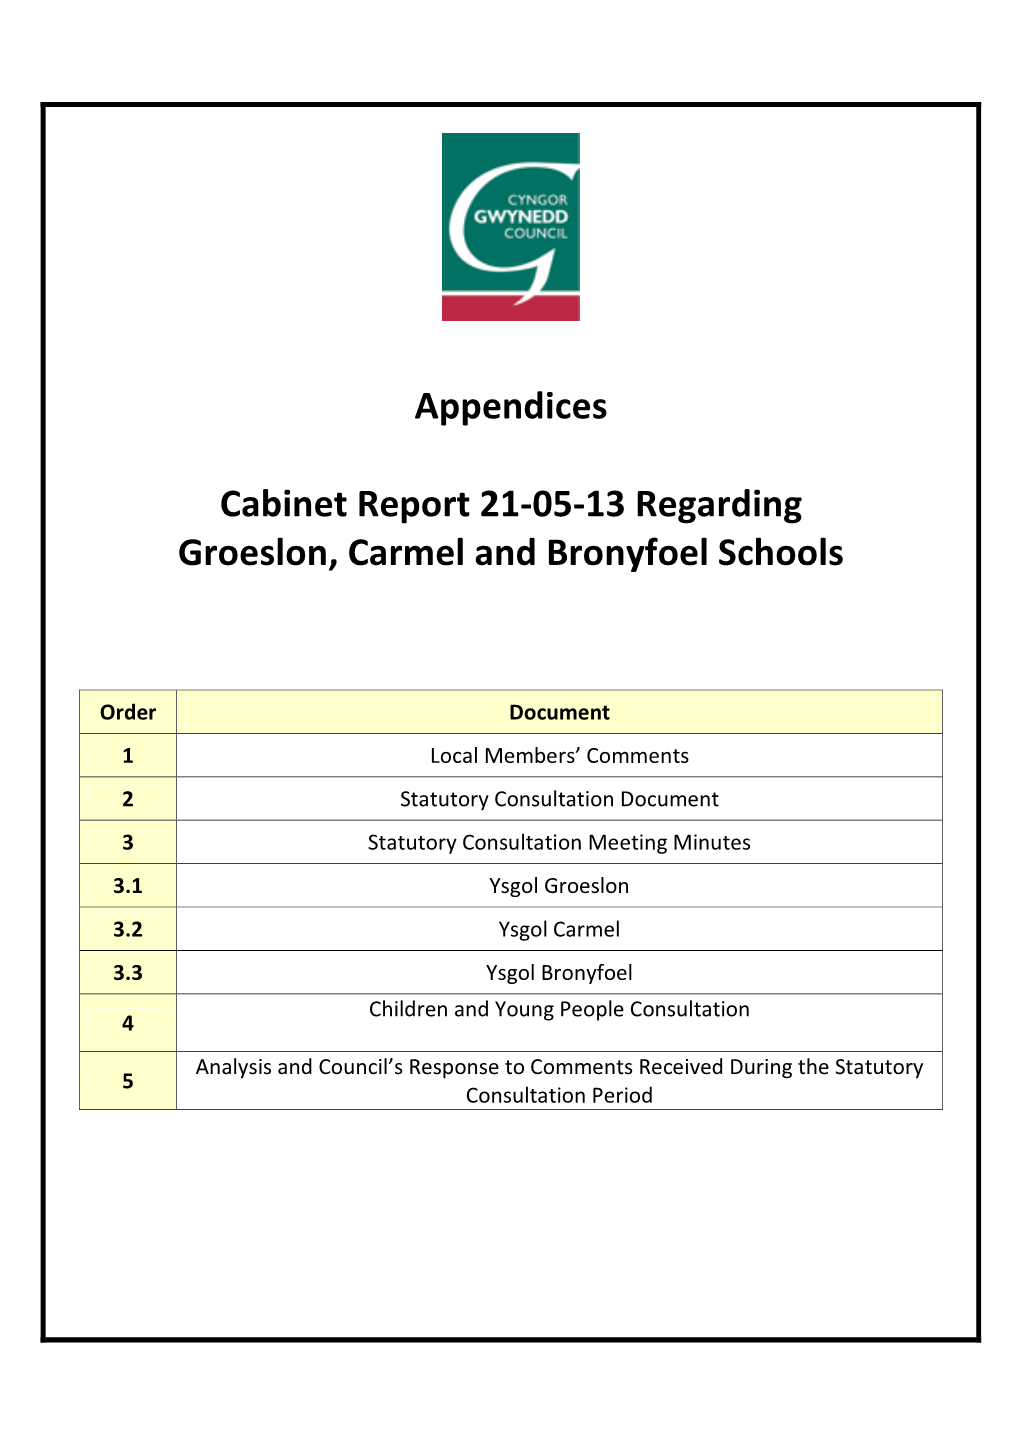 Appendices Cabinet Report 21-05-13 Regarding Groeslon, Carmel and Bronyfoel Schools